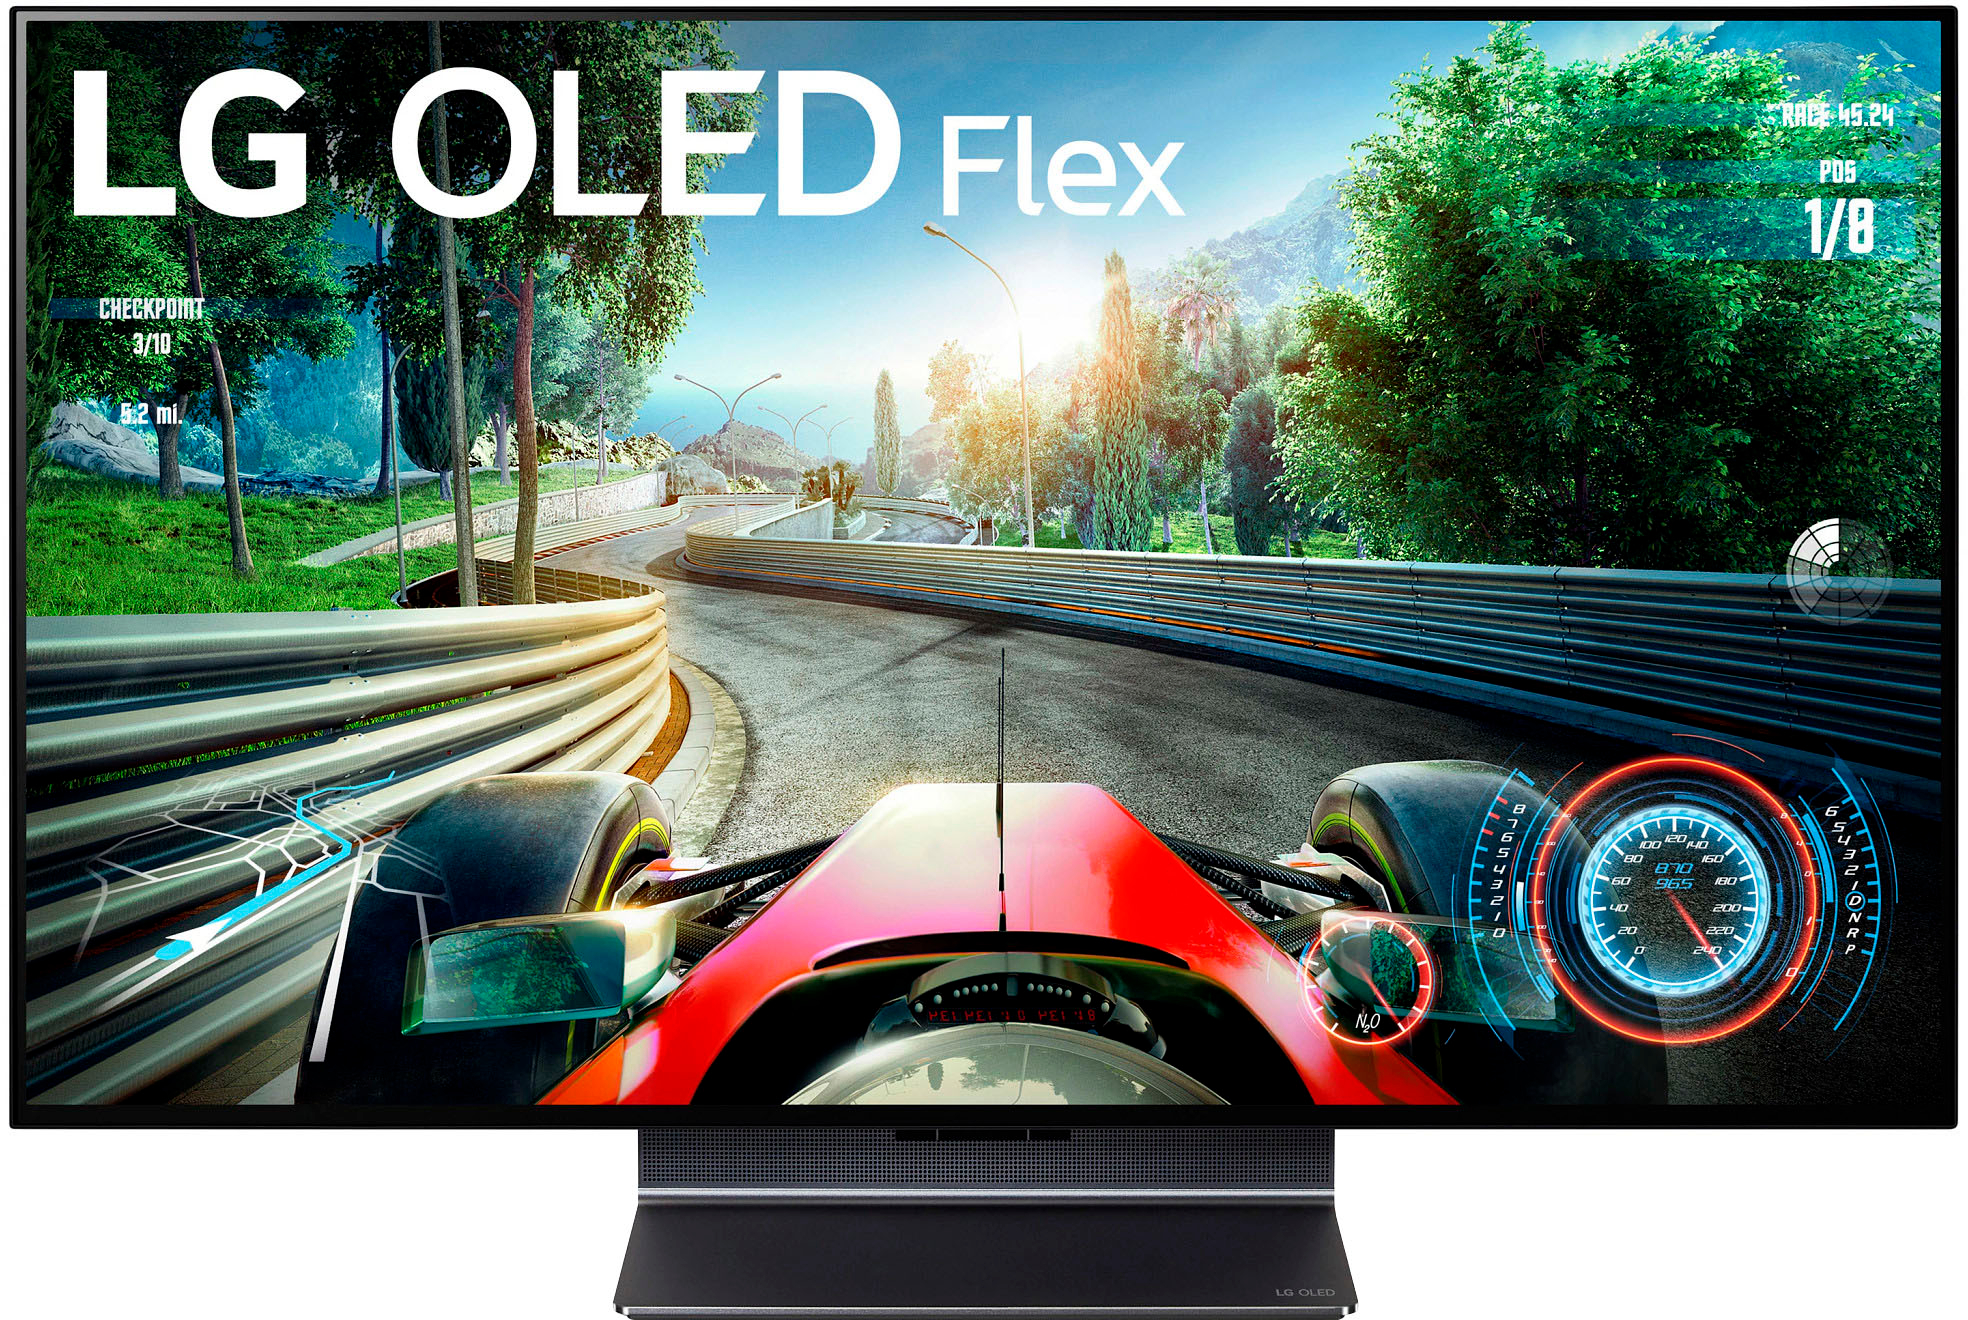 LG OLED Flex Preview